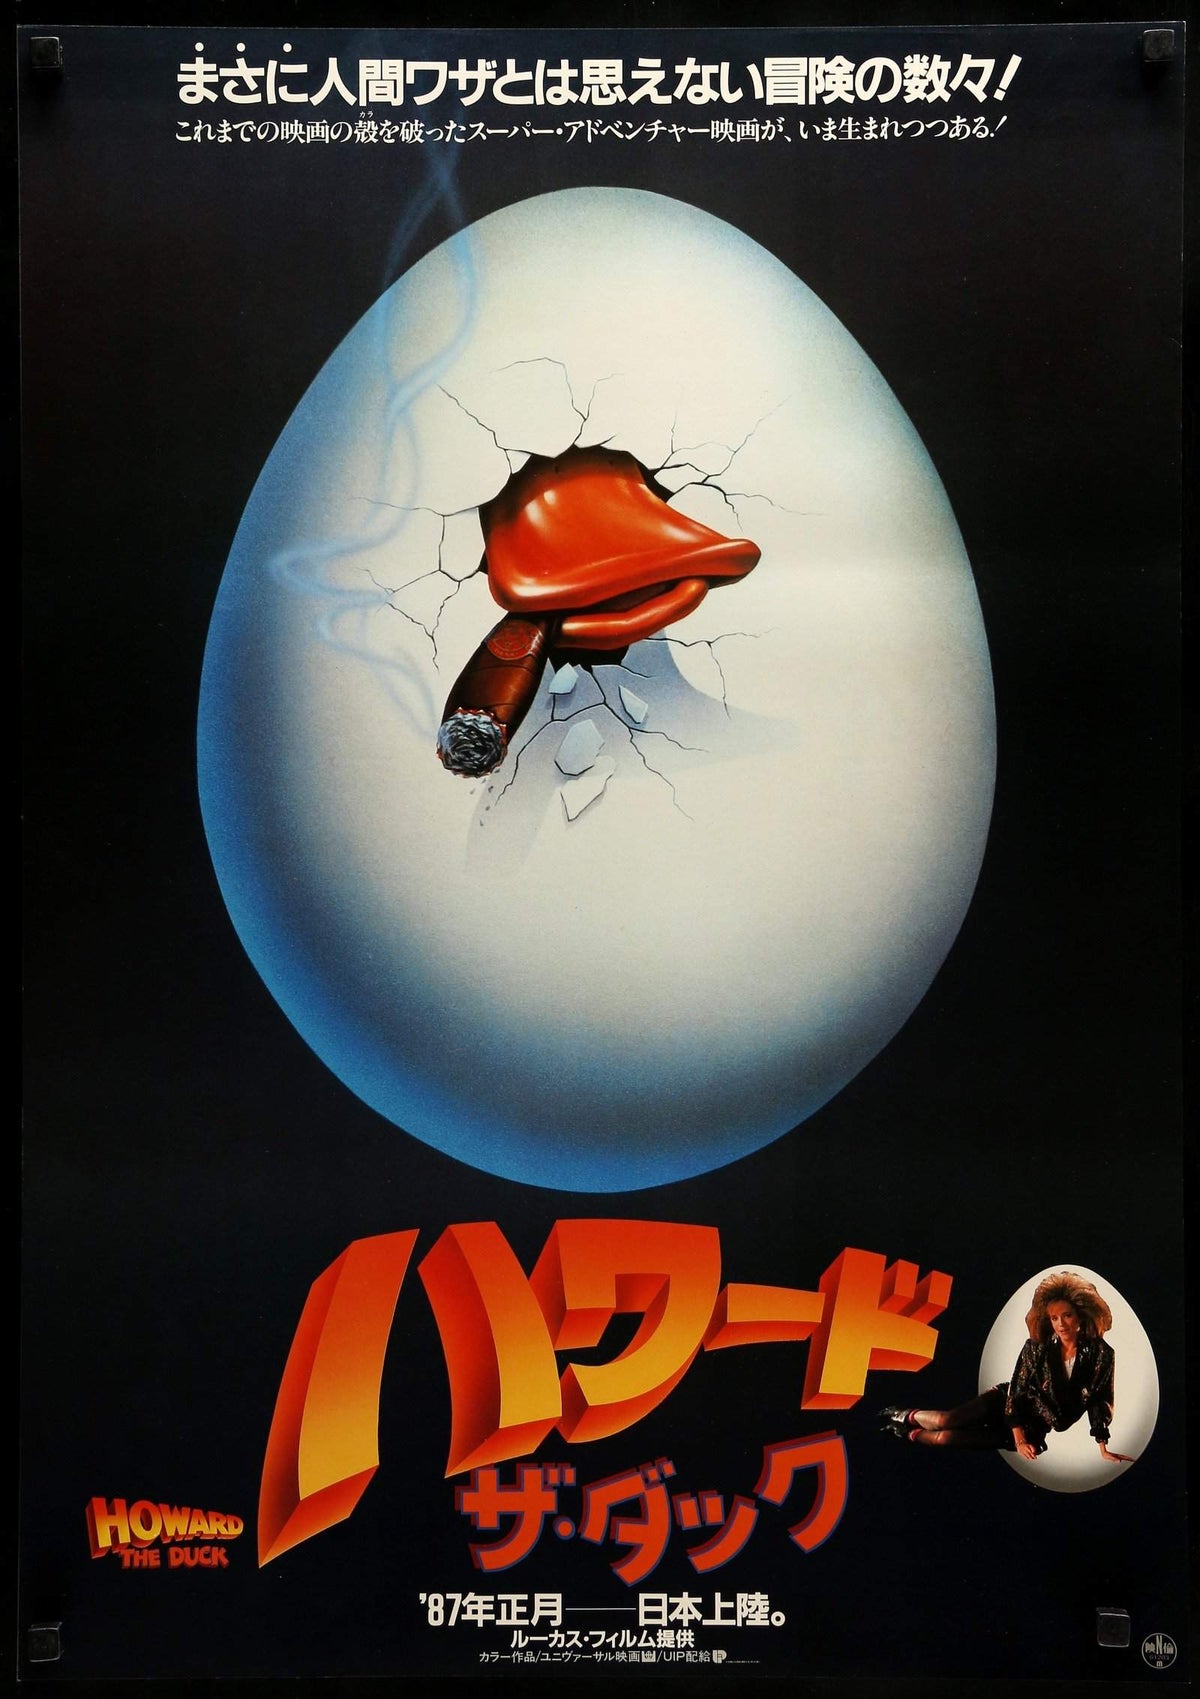 Howard the Duck (1986) original movie poster for sale at Original Film Art